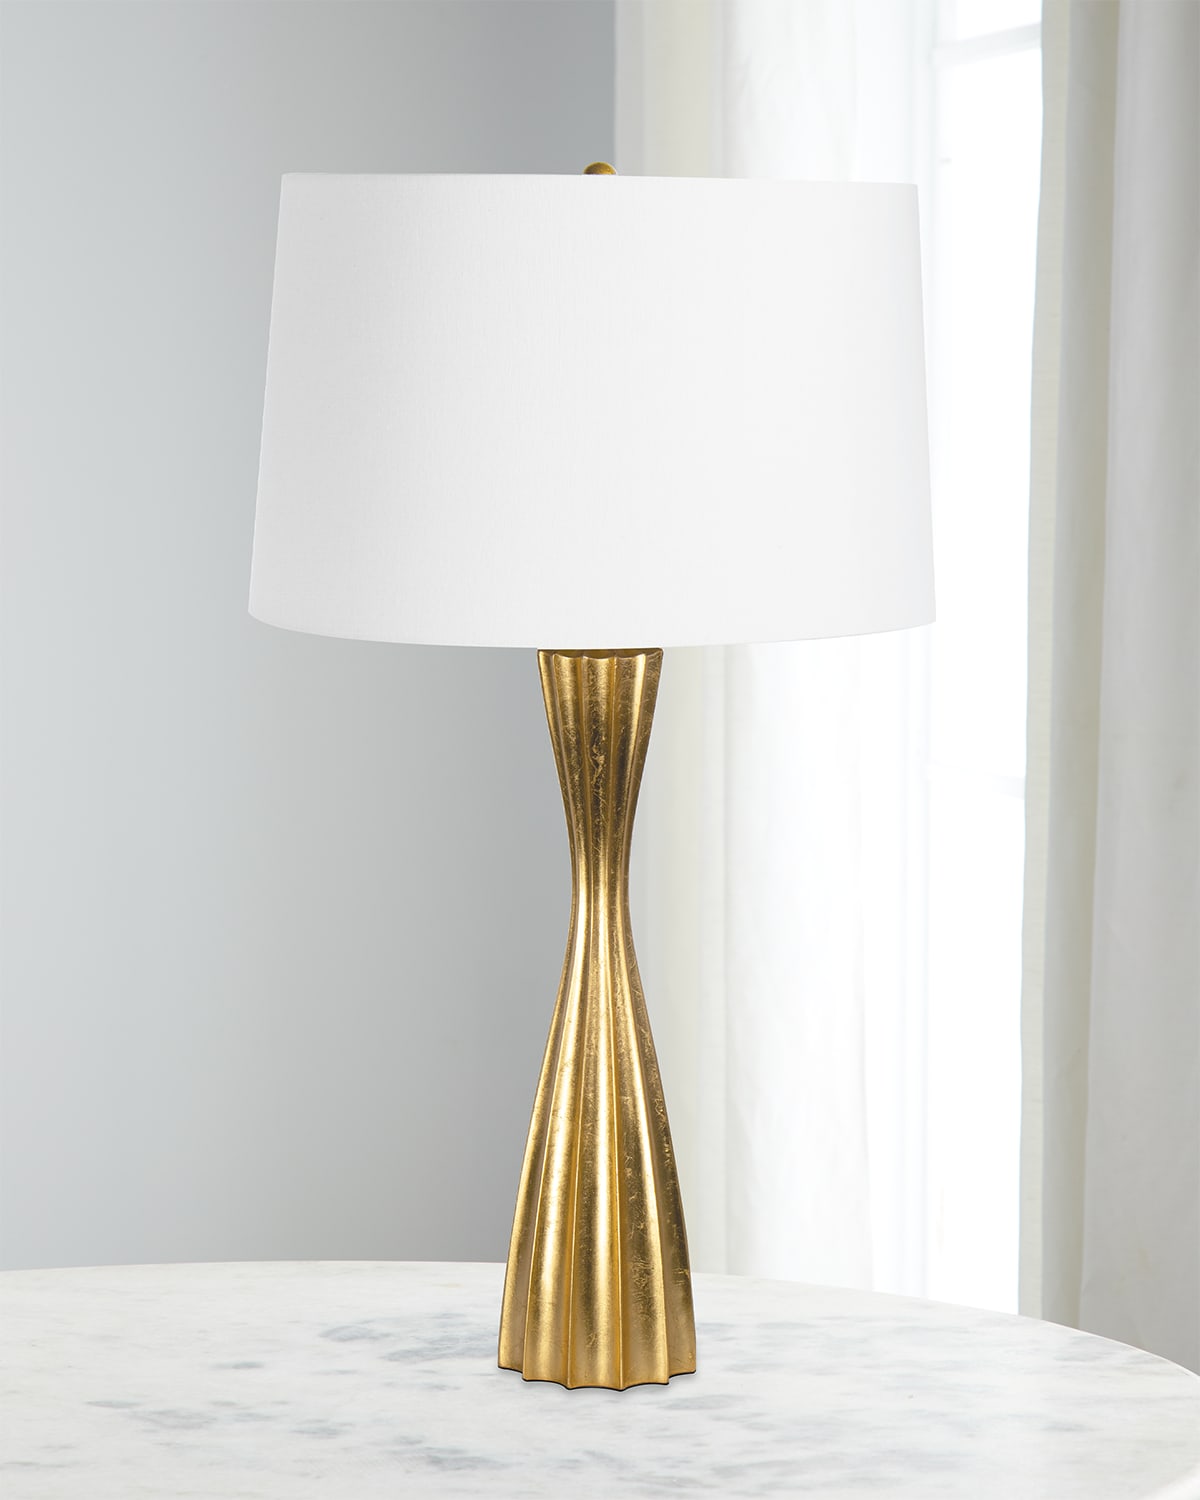 REGINA ANDREW NAOMI RESIN TABLE LAMP, GOLD LEAF